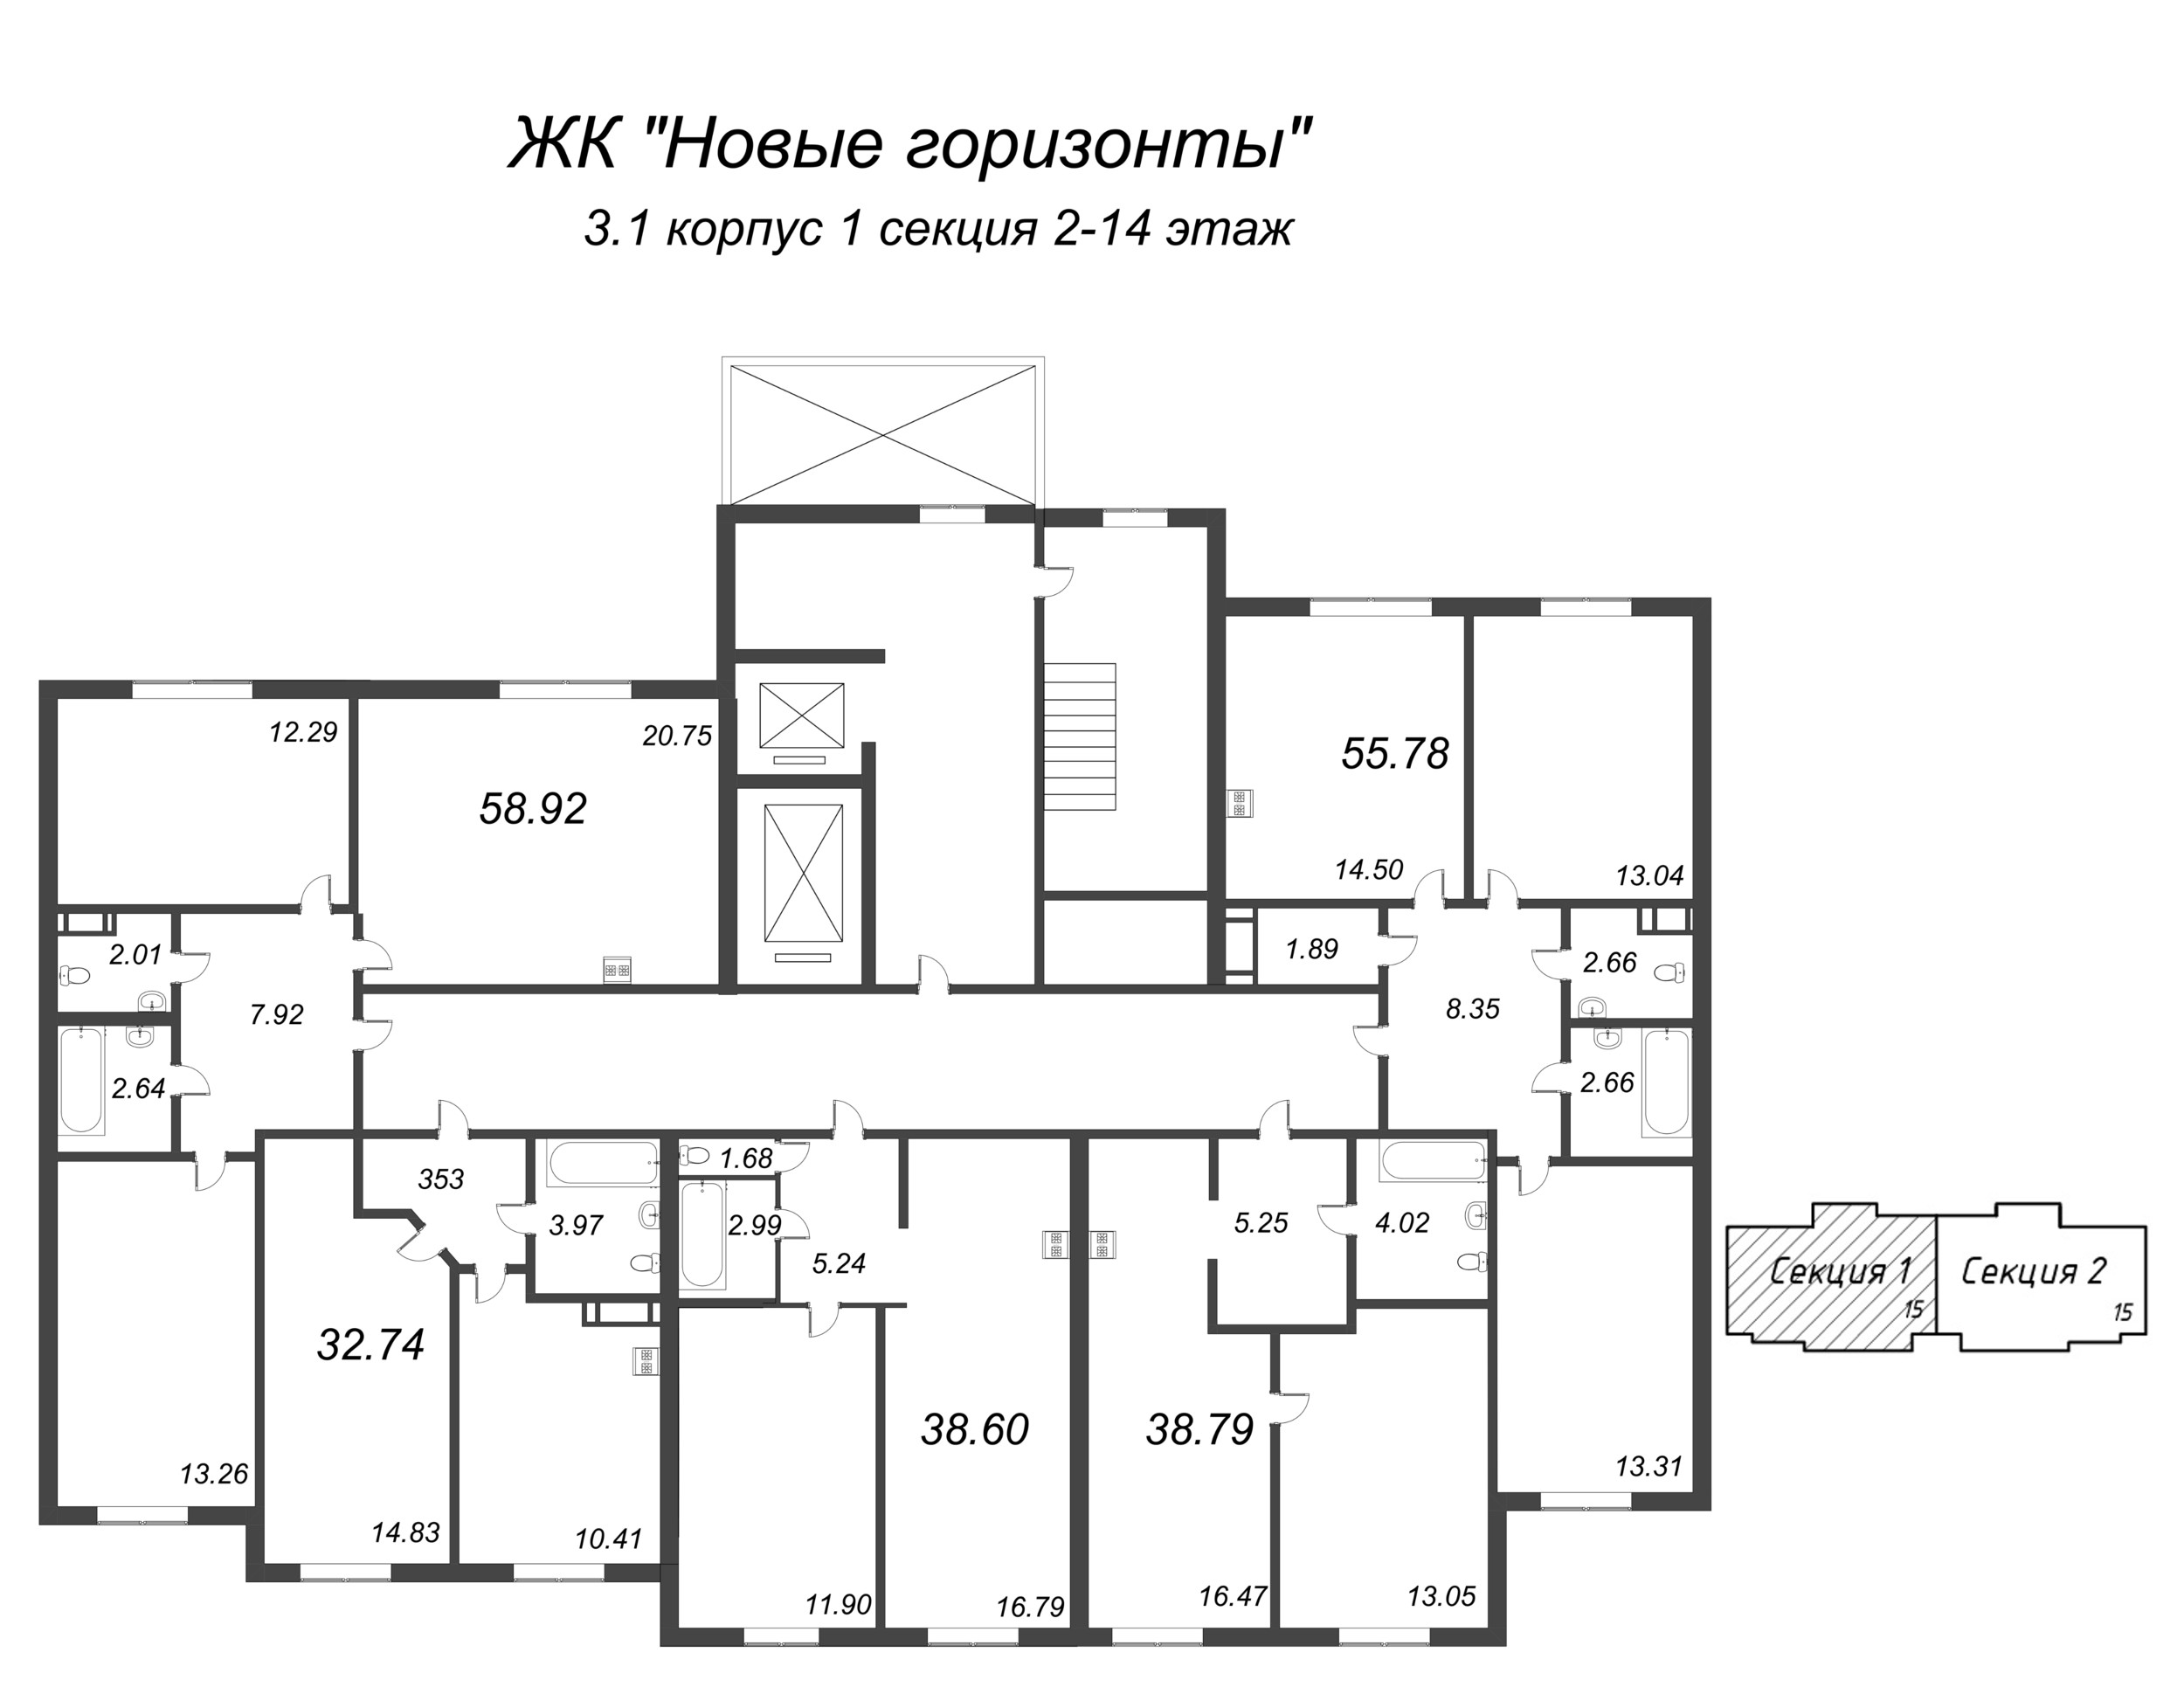 3-комнатная (Евро) квартира, 58.92 м² - планировка этажа